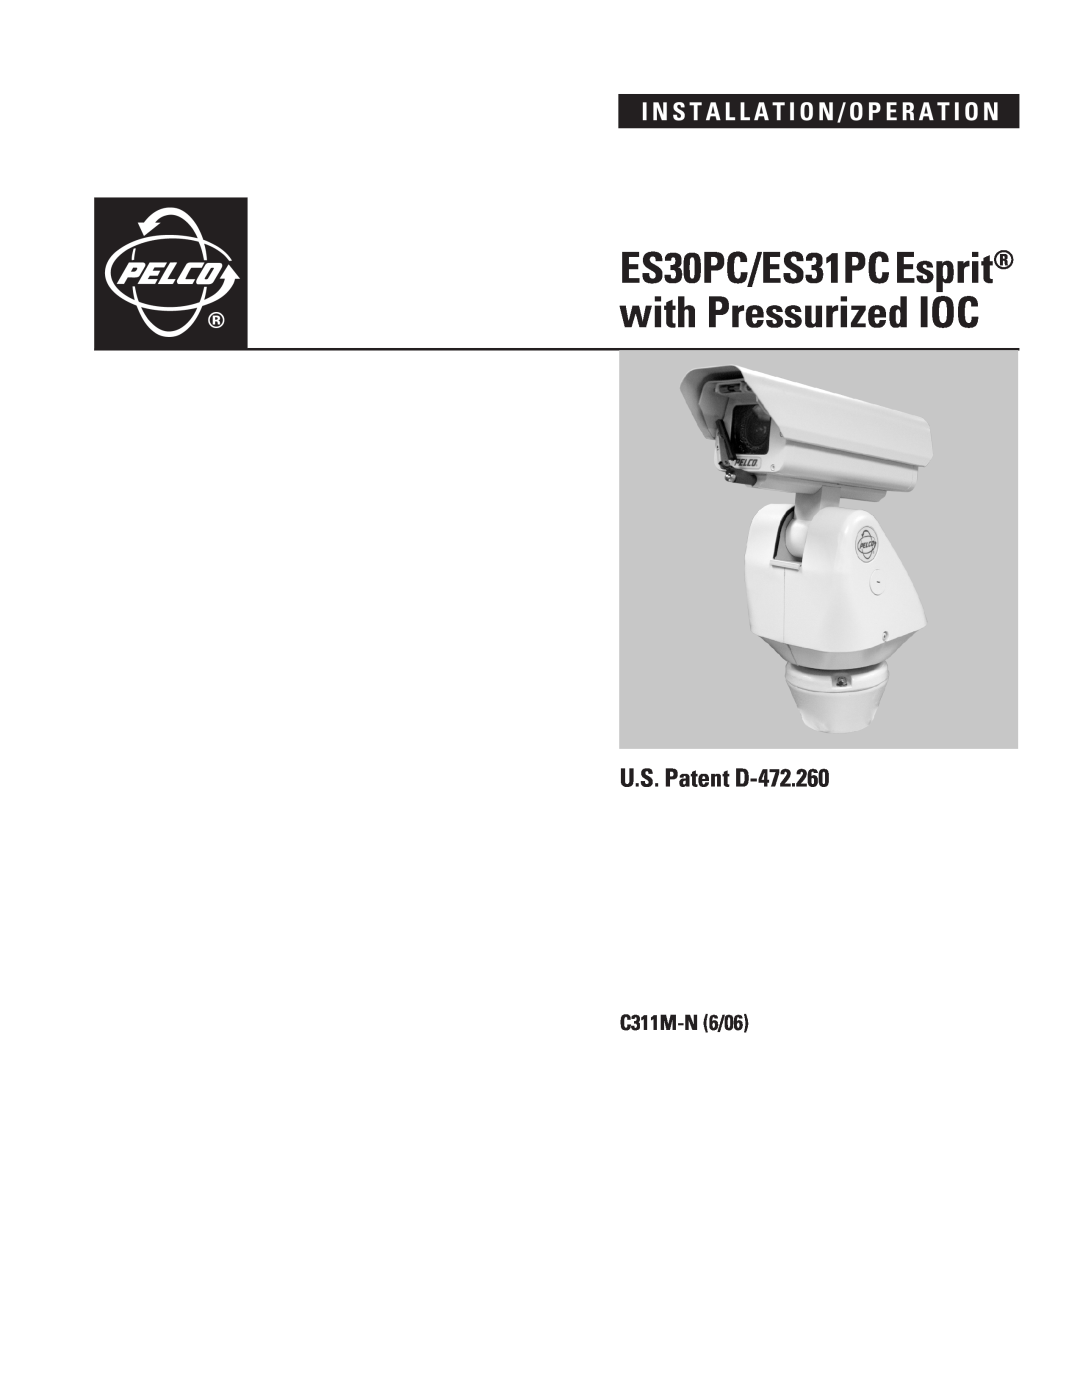 Pelco manual U.S. Patent D-472.260, C311M-N6/06, ES30PC/ES31PC Esprit with Pressurized IOC 